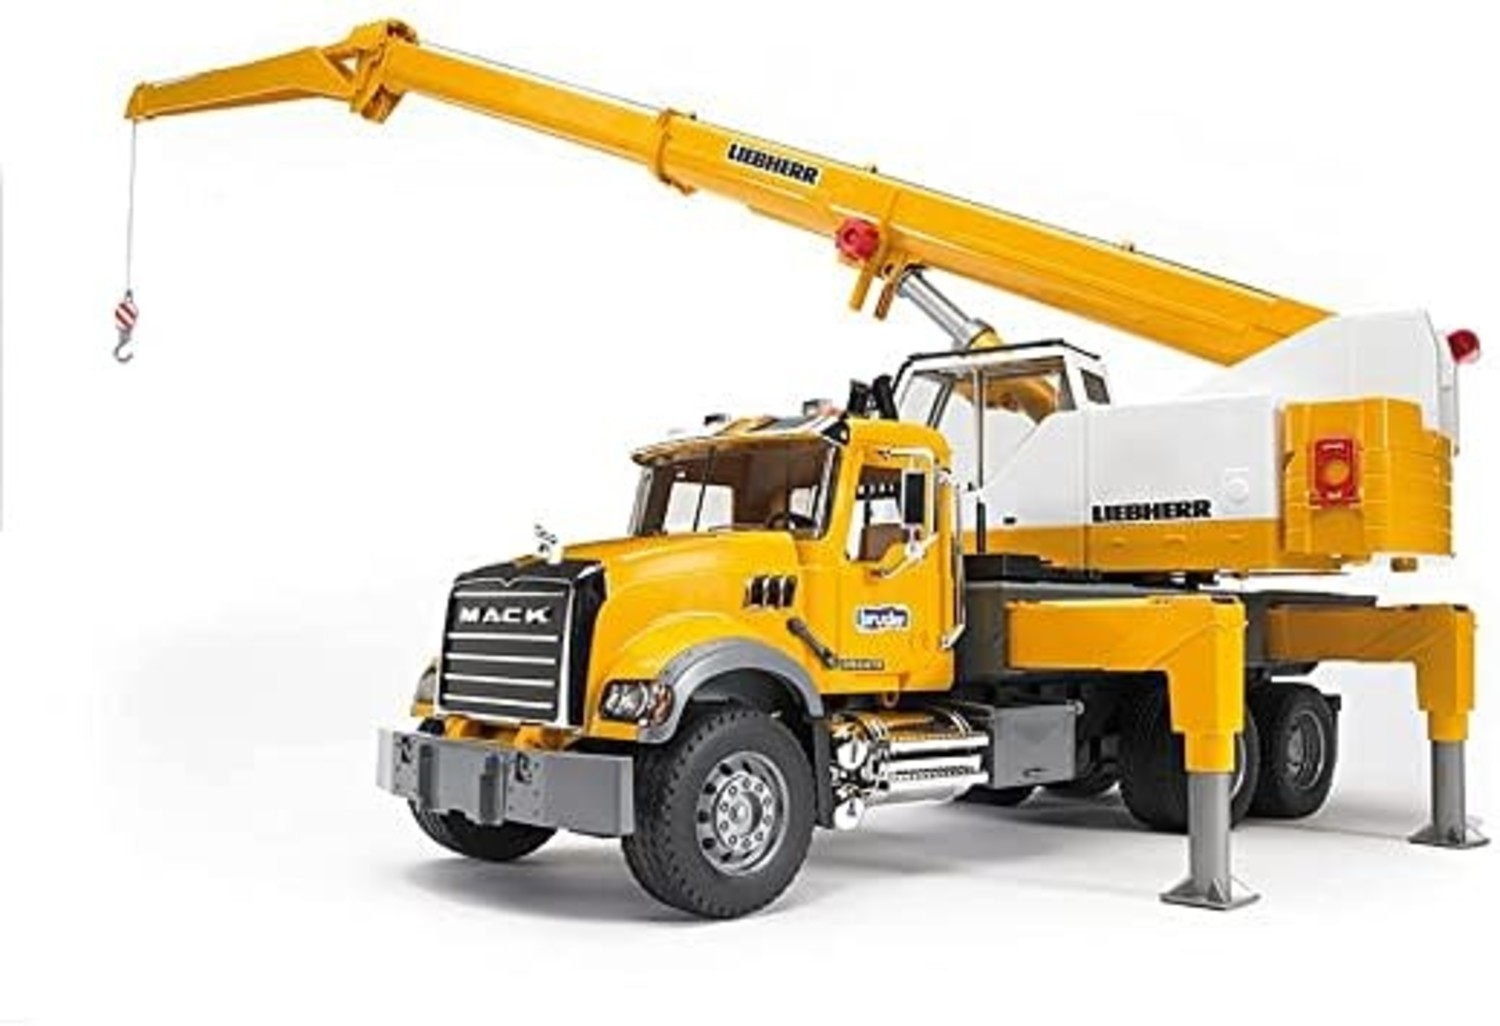 Mack Granite Crane Truck Bruder - Mudpuddles Toys and Books